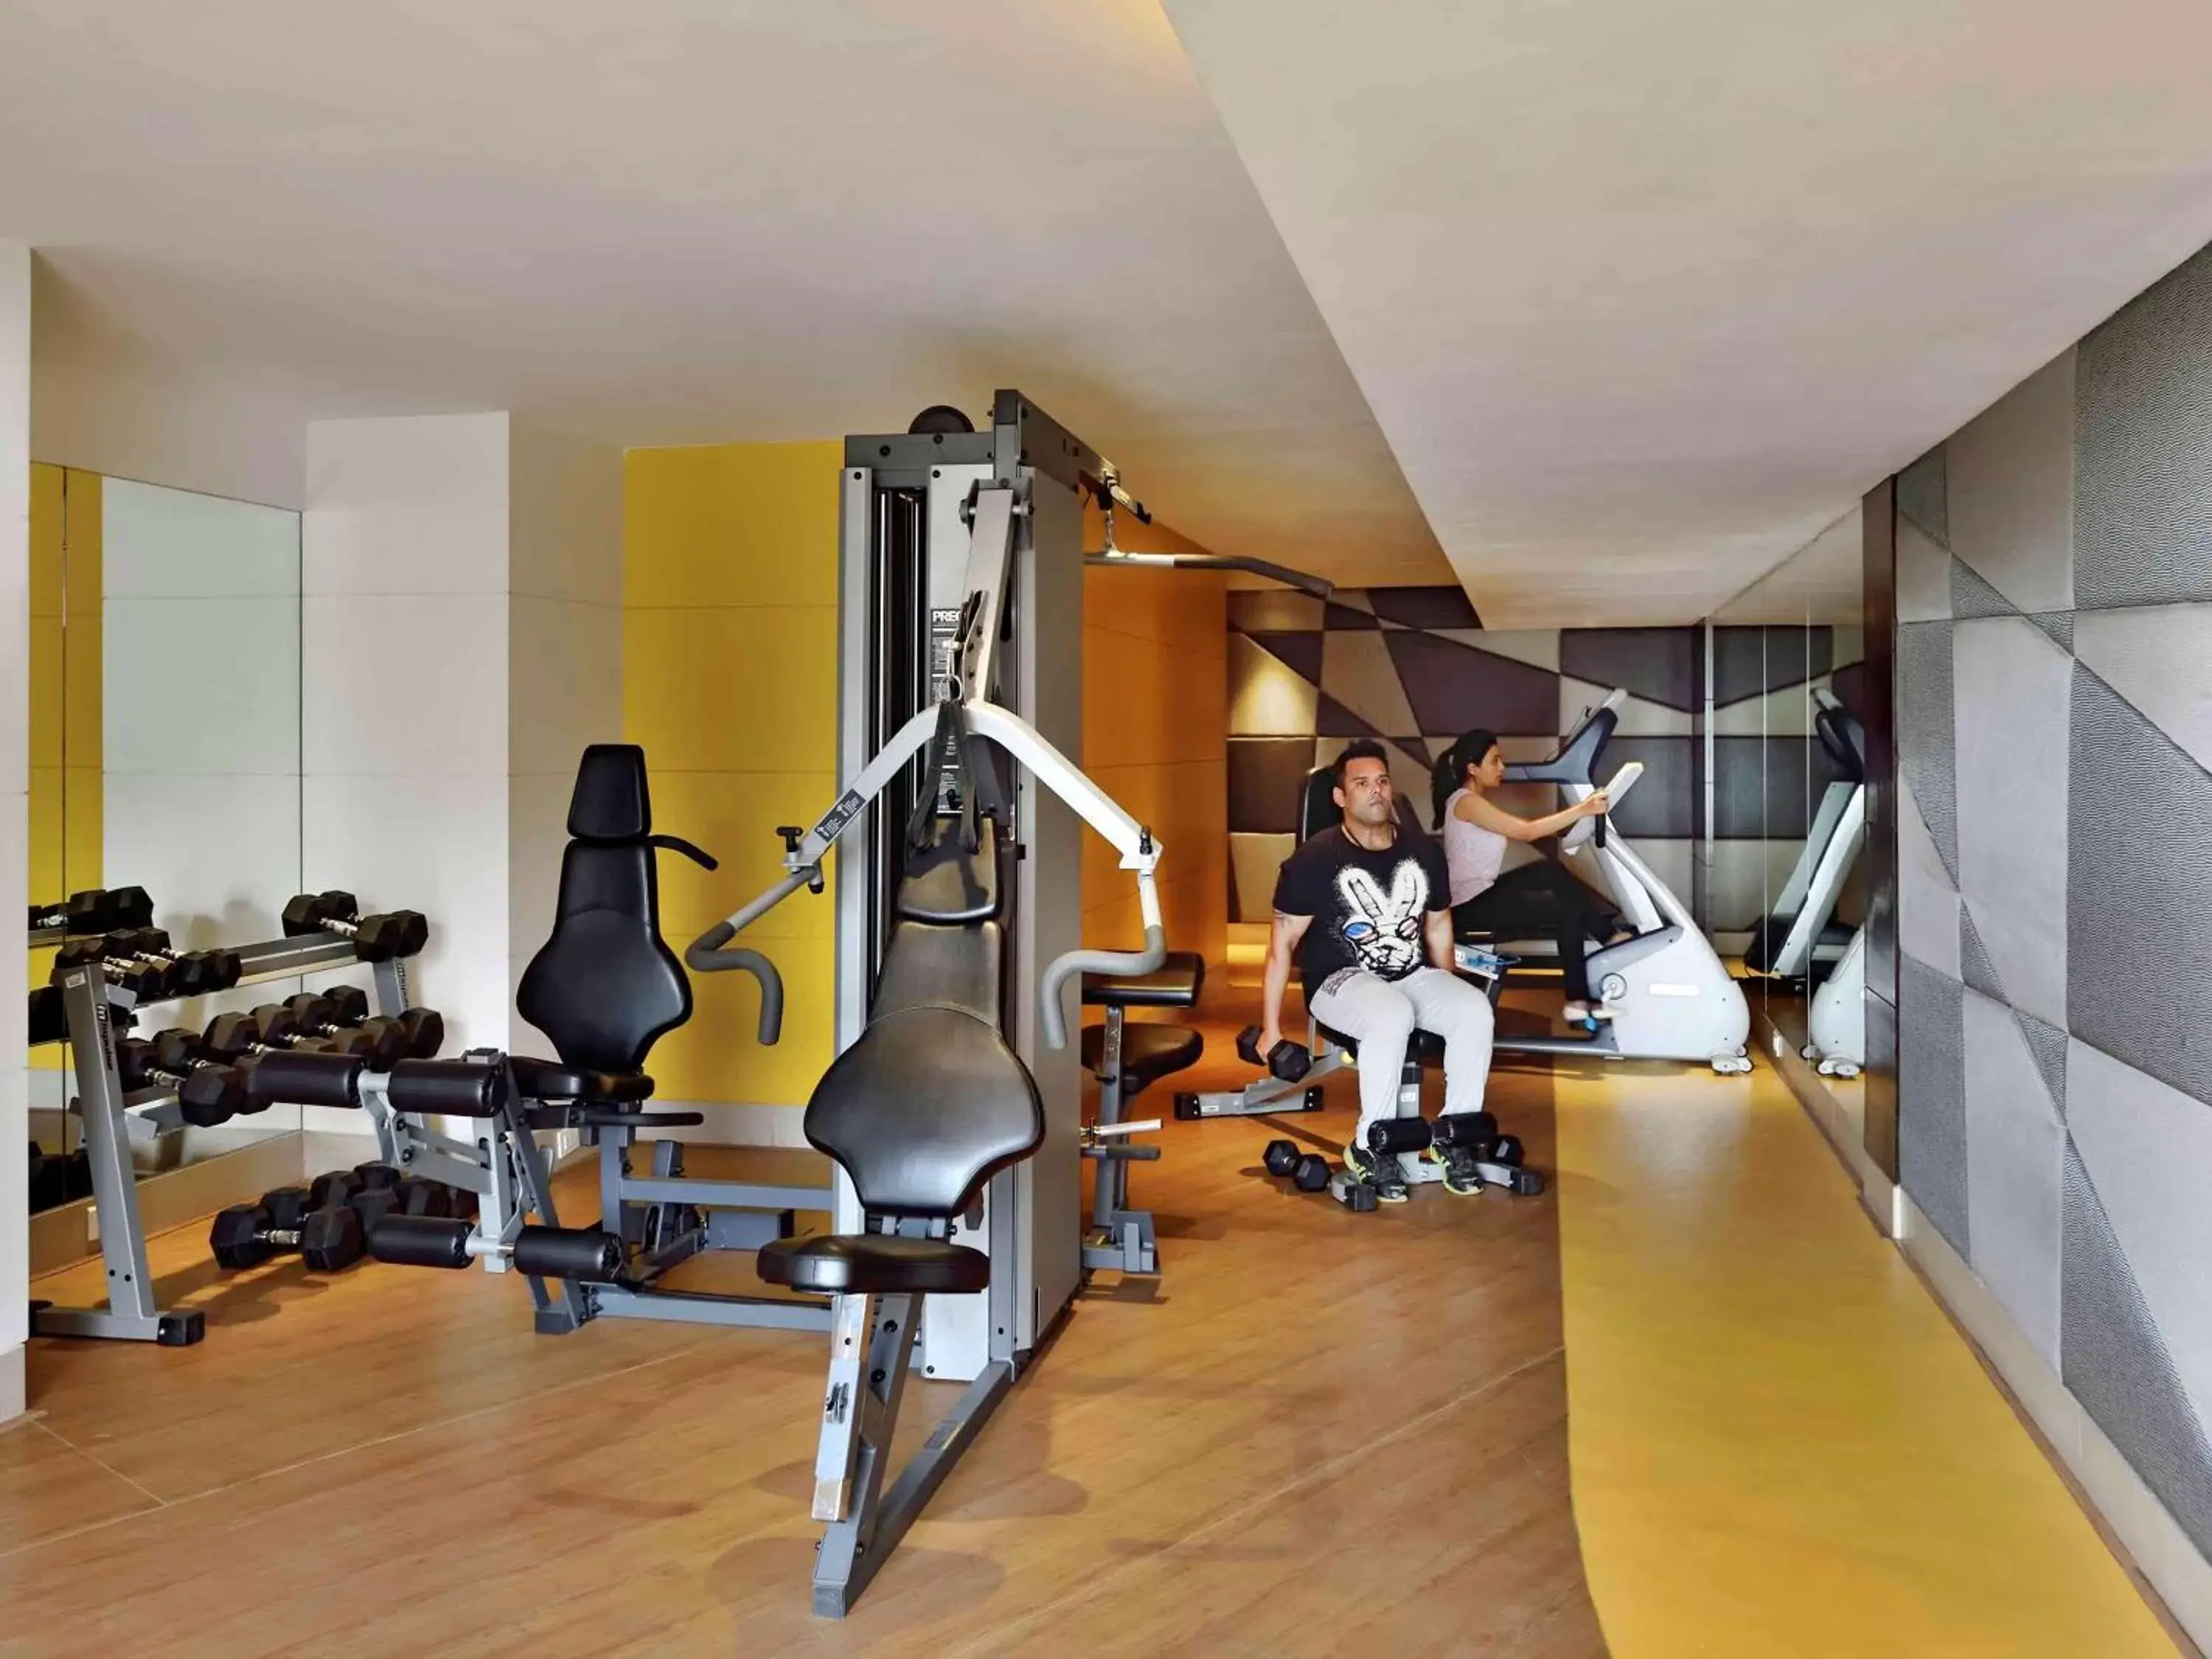 Fitness centre/facilities, Fitness Center/Facilities in Novotel Imagicaa Khopoli